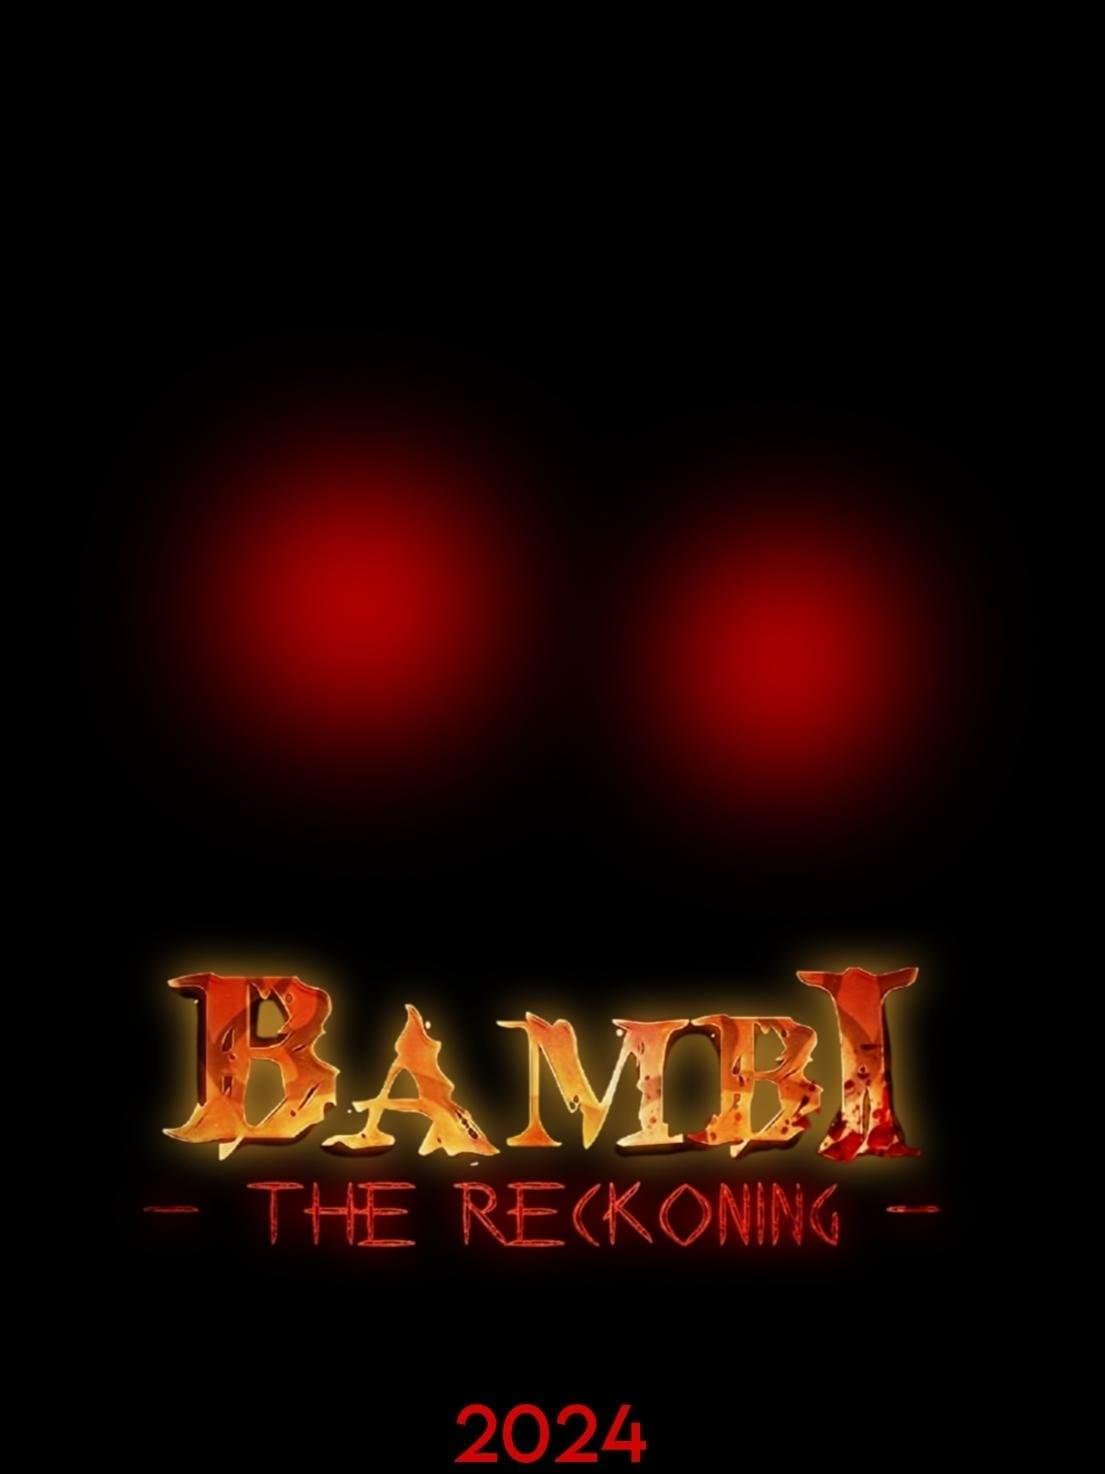 Bambi: The Reckoning poster